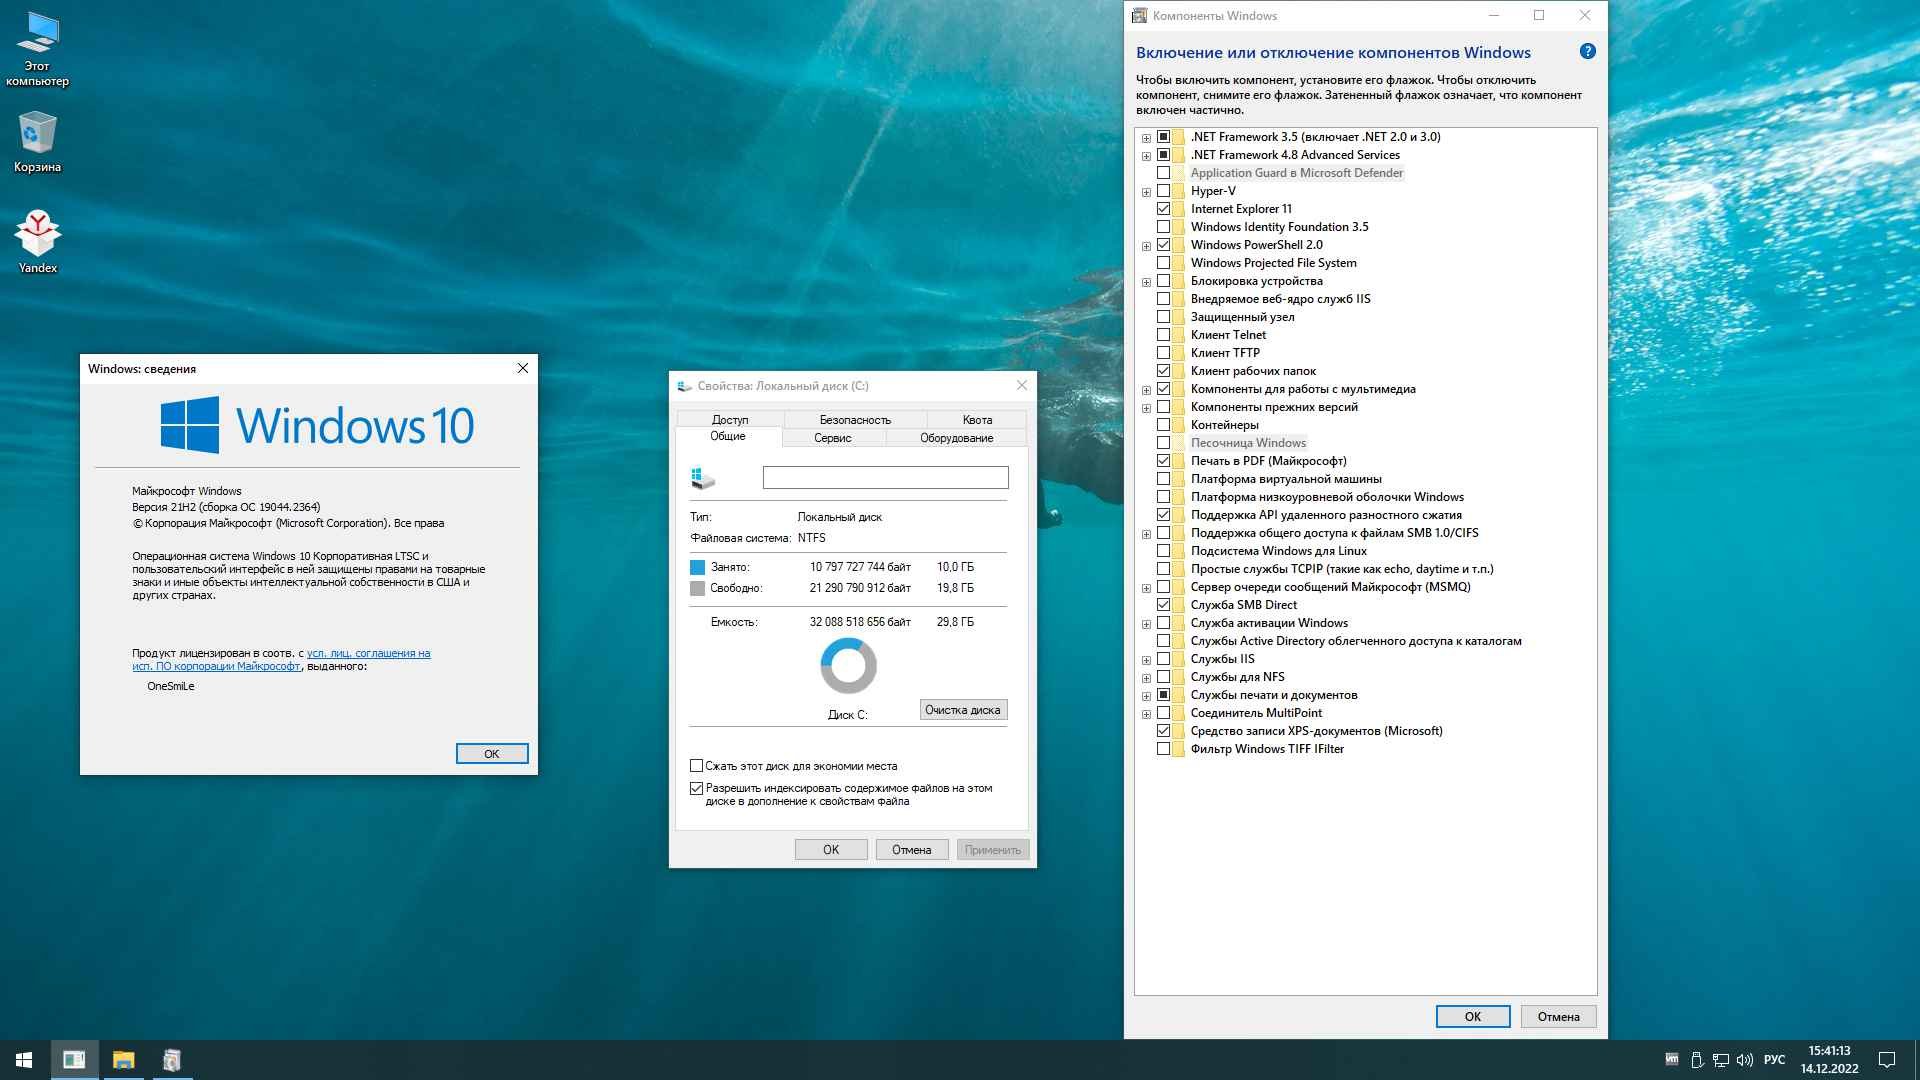 Kak windows 10. Windows 10 Enterprise LTSC x64 Rus by ONESMILE 19044.1739. Windows 10 Version 21h2. Последняя версия виндовс 10. Архив виндовс.